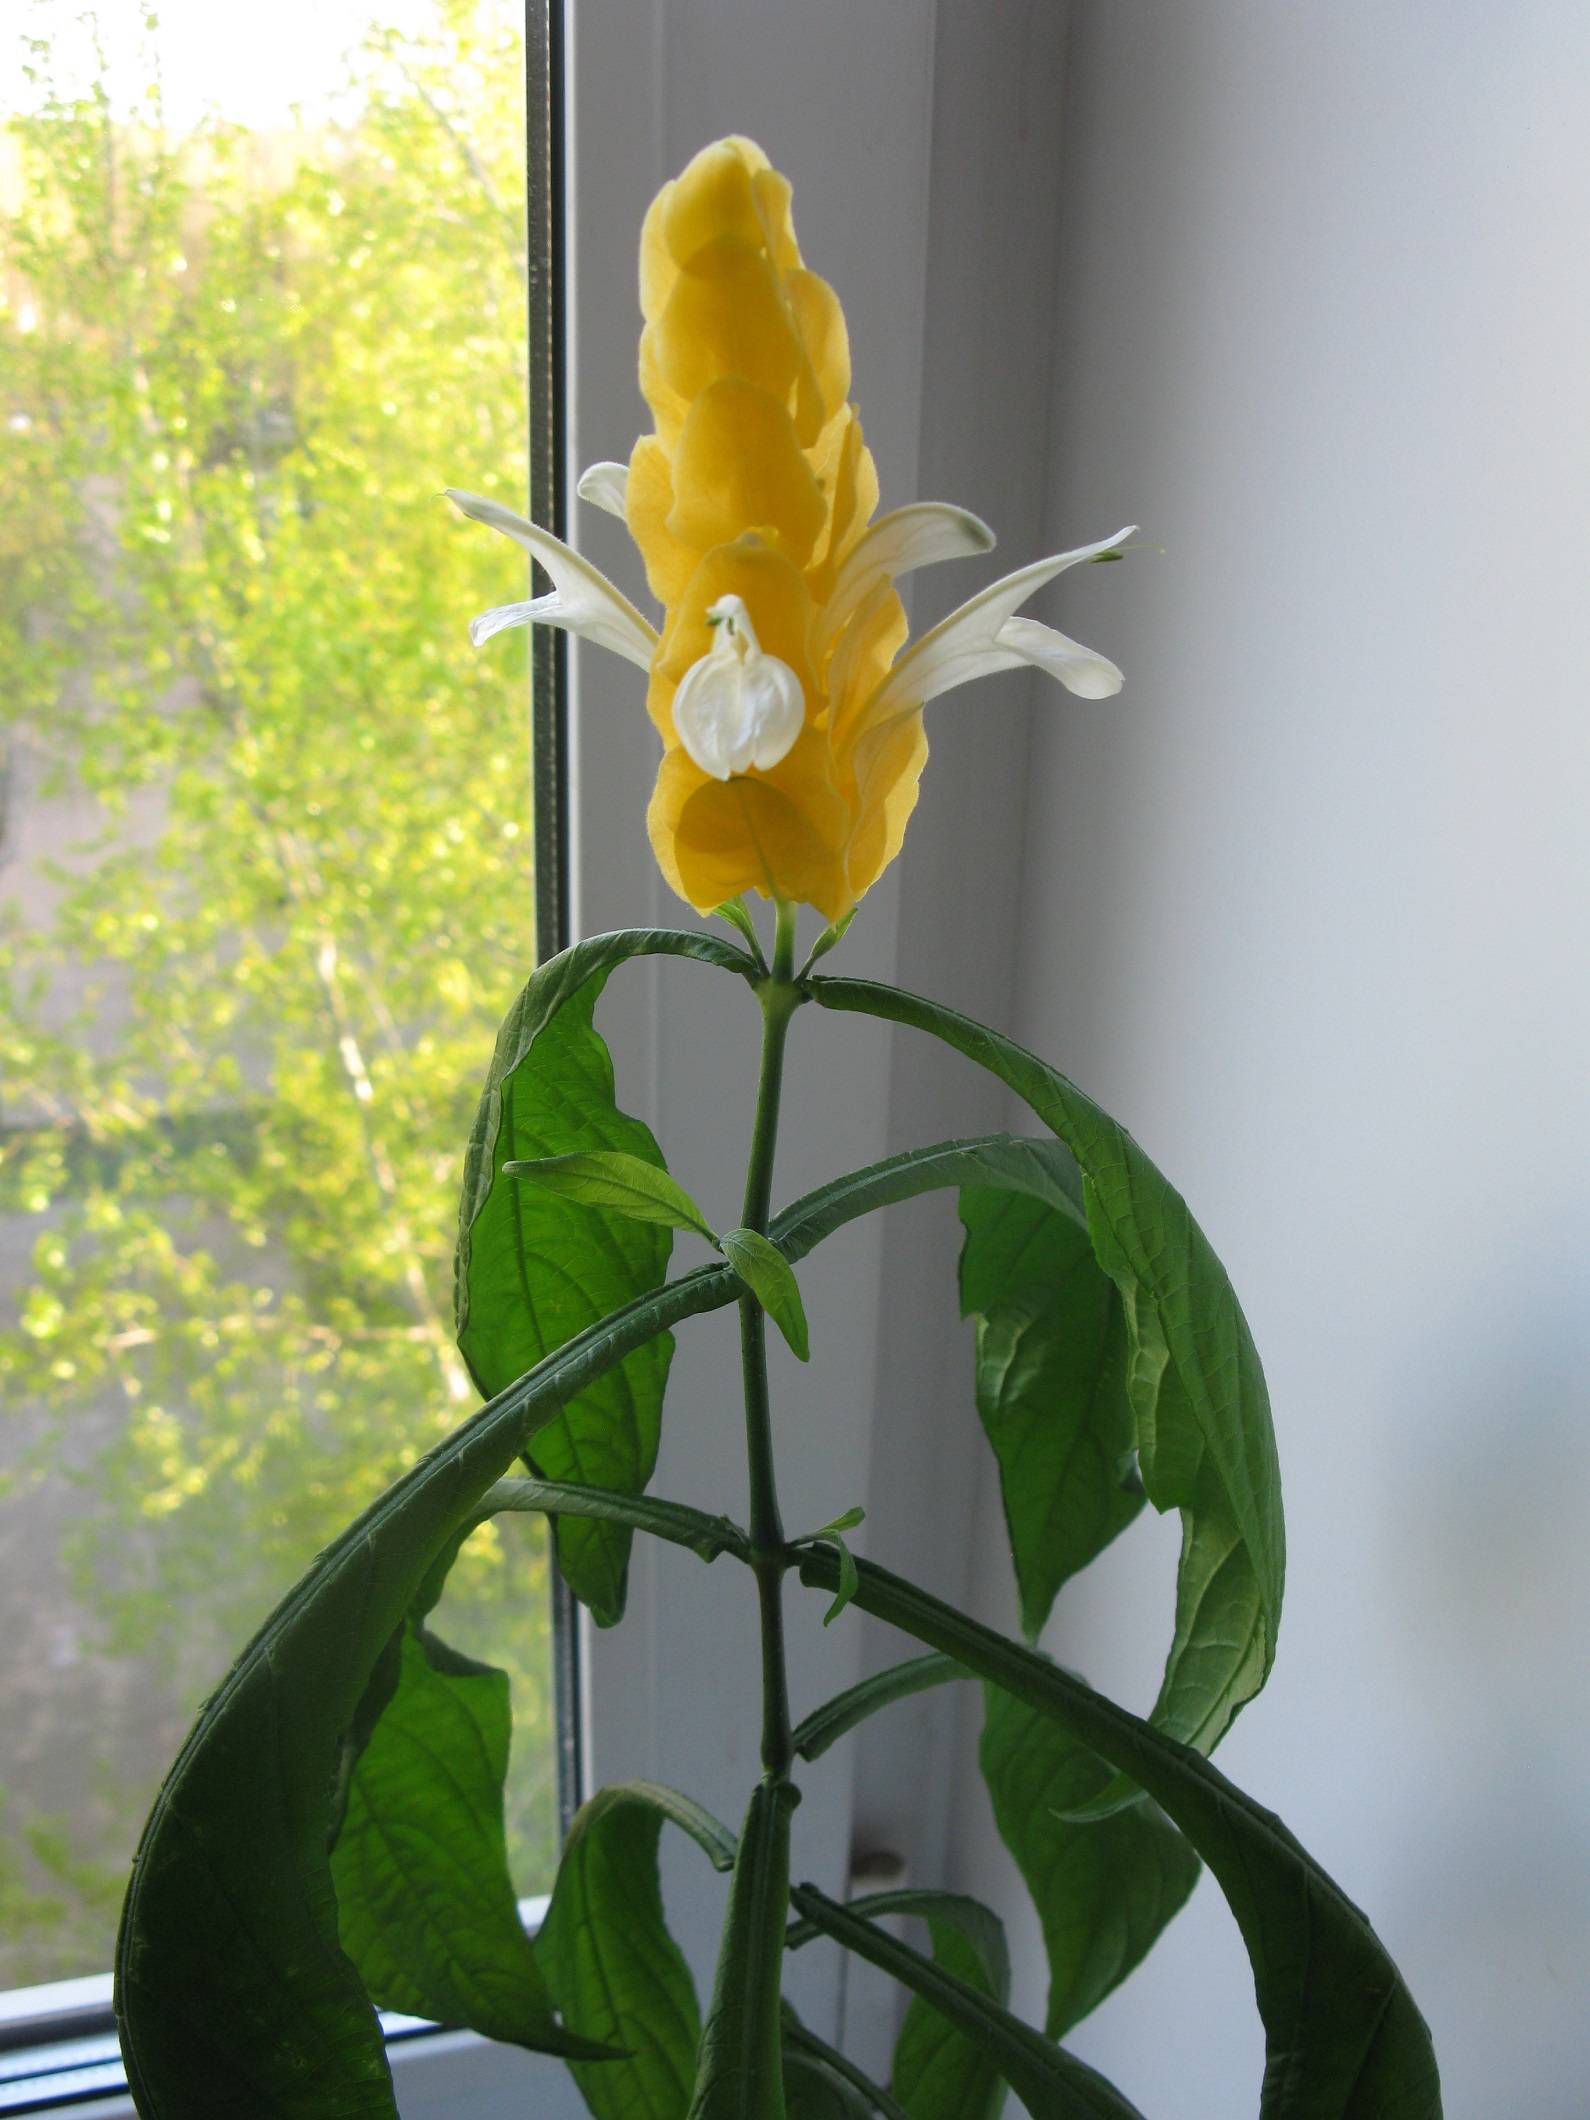 Комнатный цветок пахистахис – уход и размножение